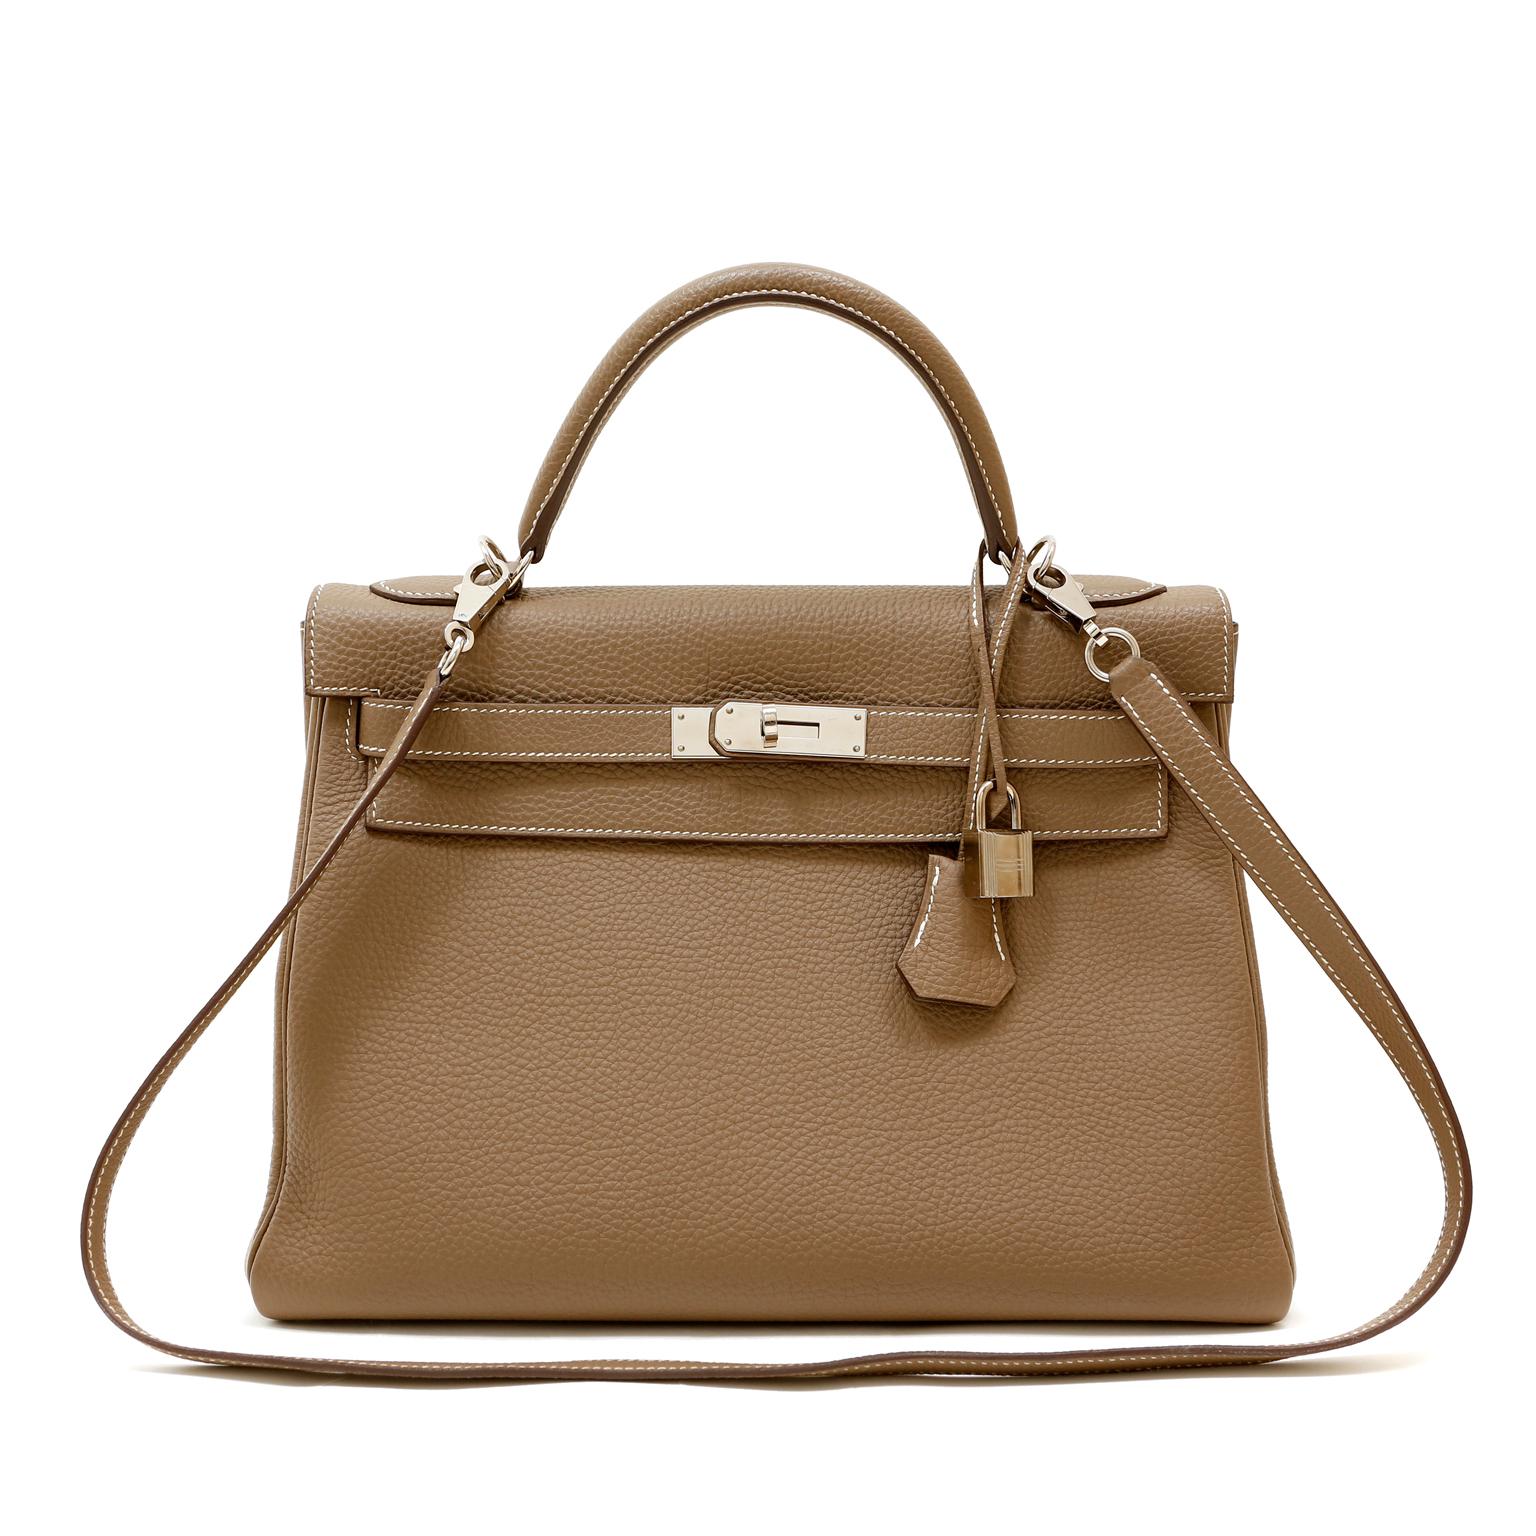 Brown Hermès Taupe Togo Leather 32 cm Kelly Bag with Palladium